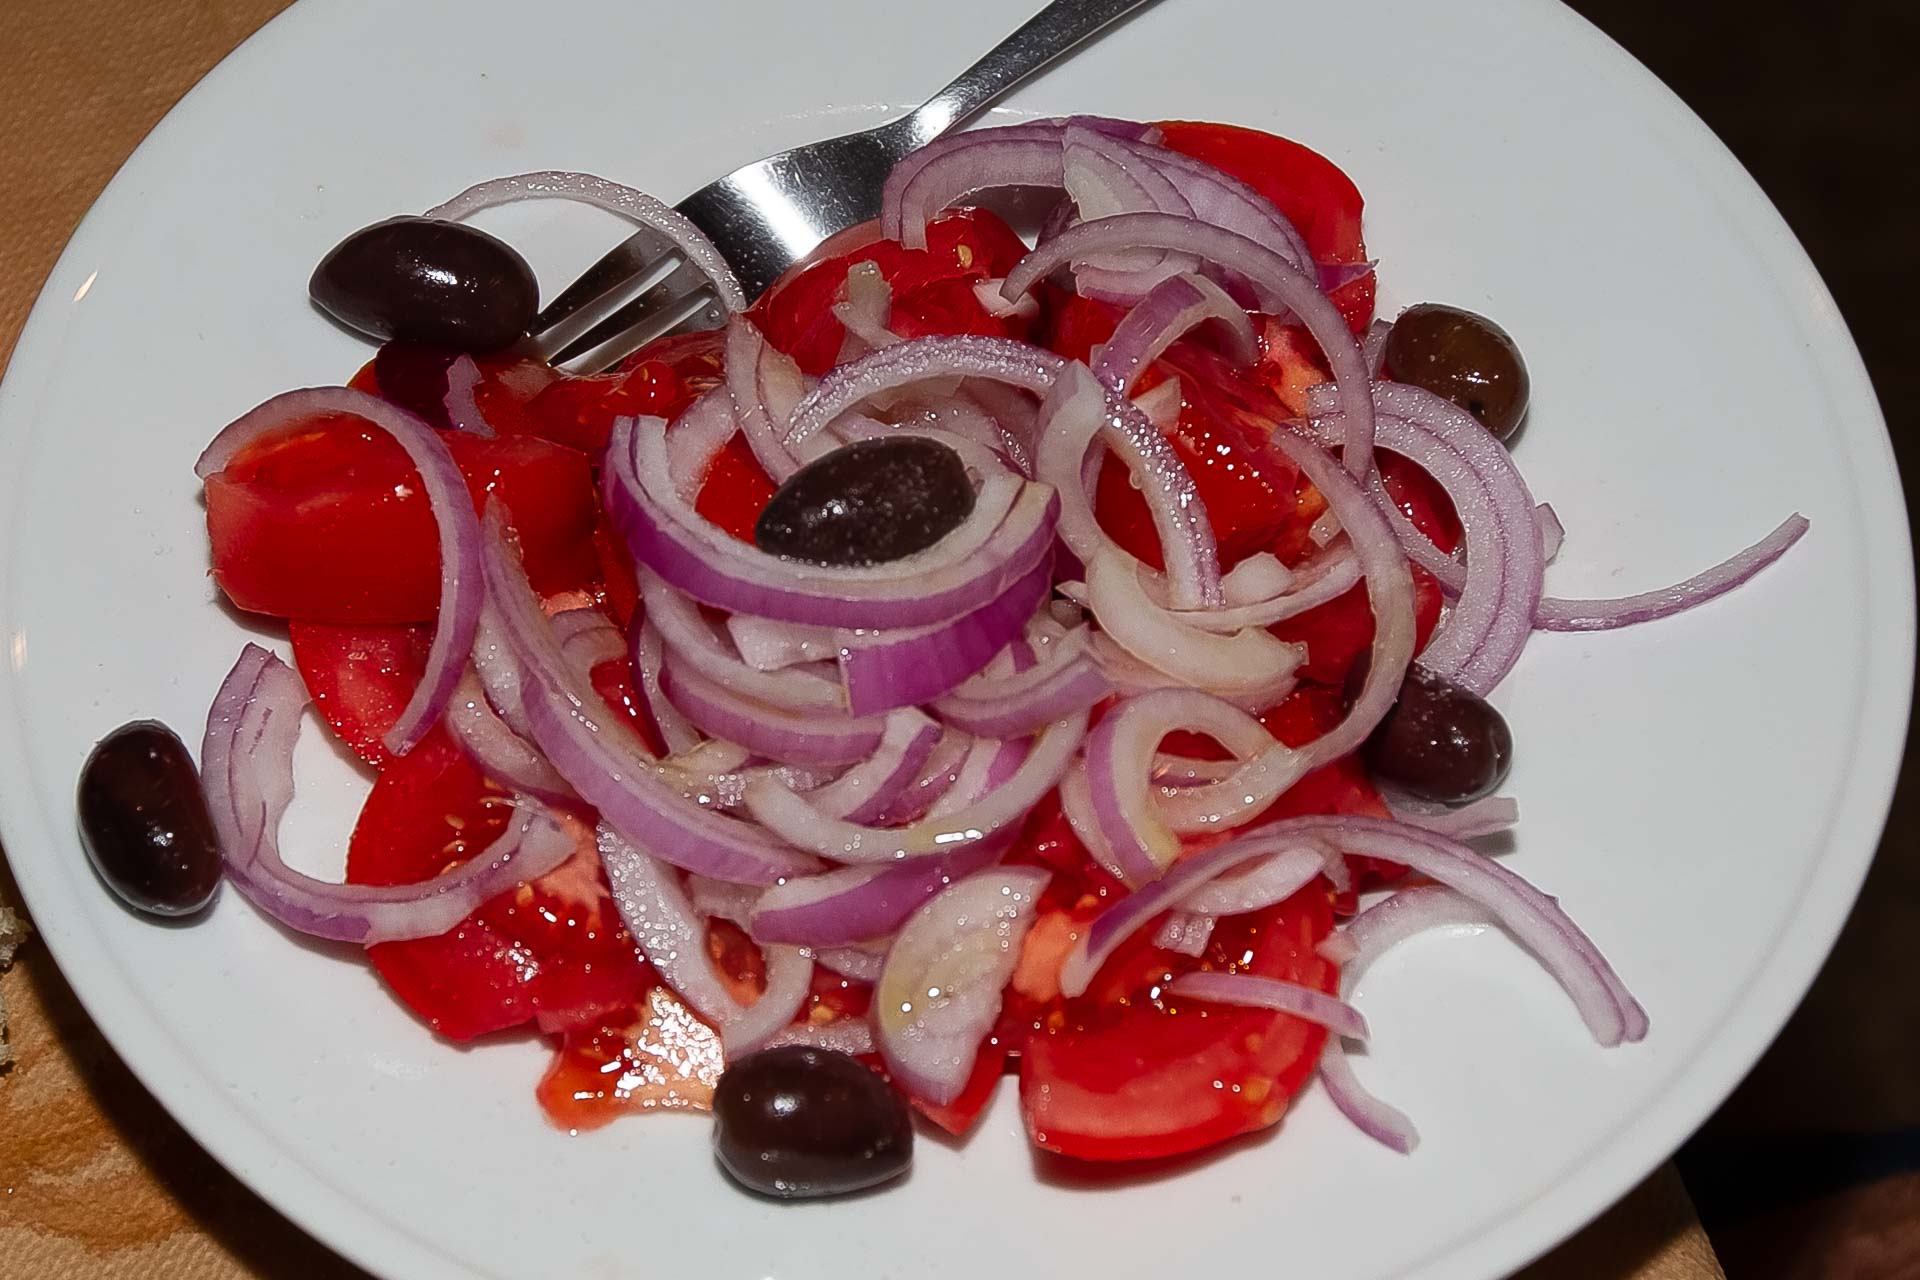 Regional tomato salad